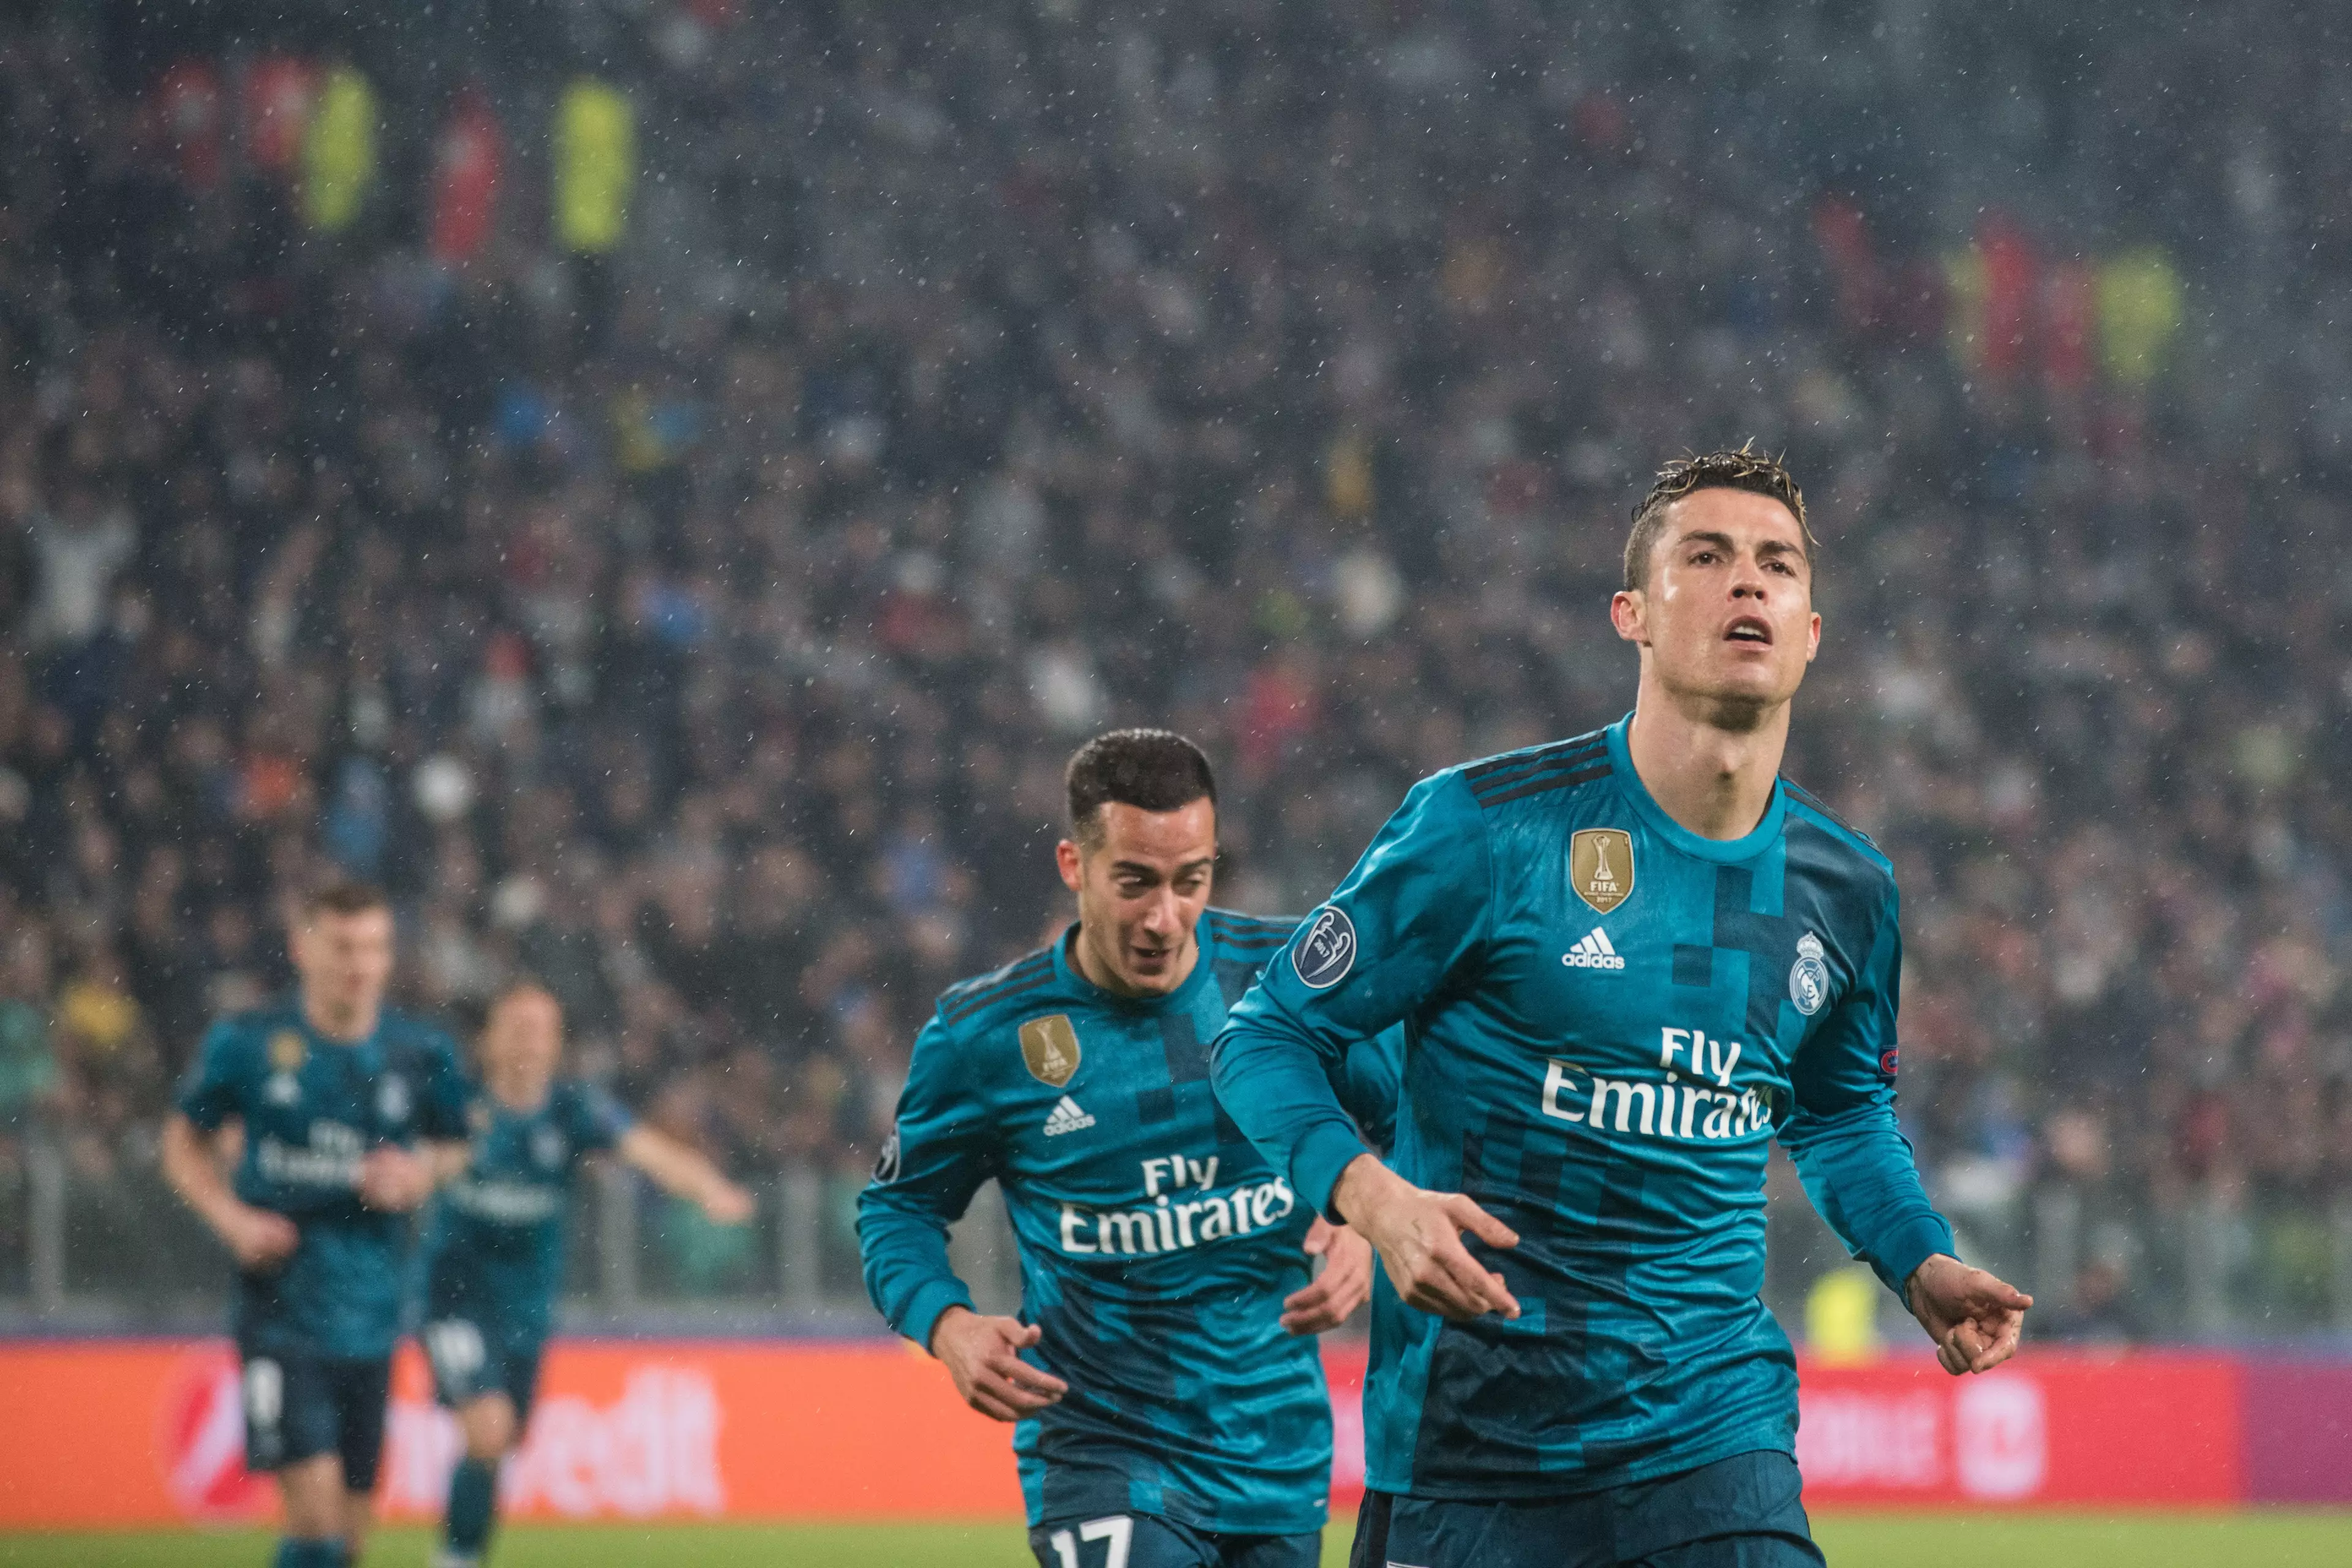 Ronaldo wheels away in celebration after scoring a goal against Juventus. Image: PA